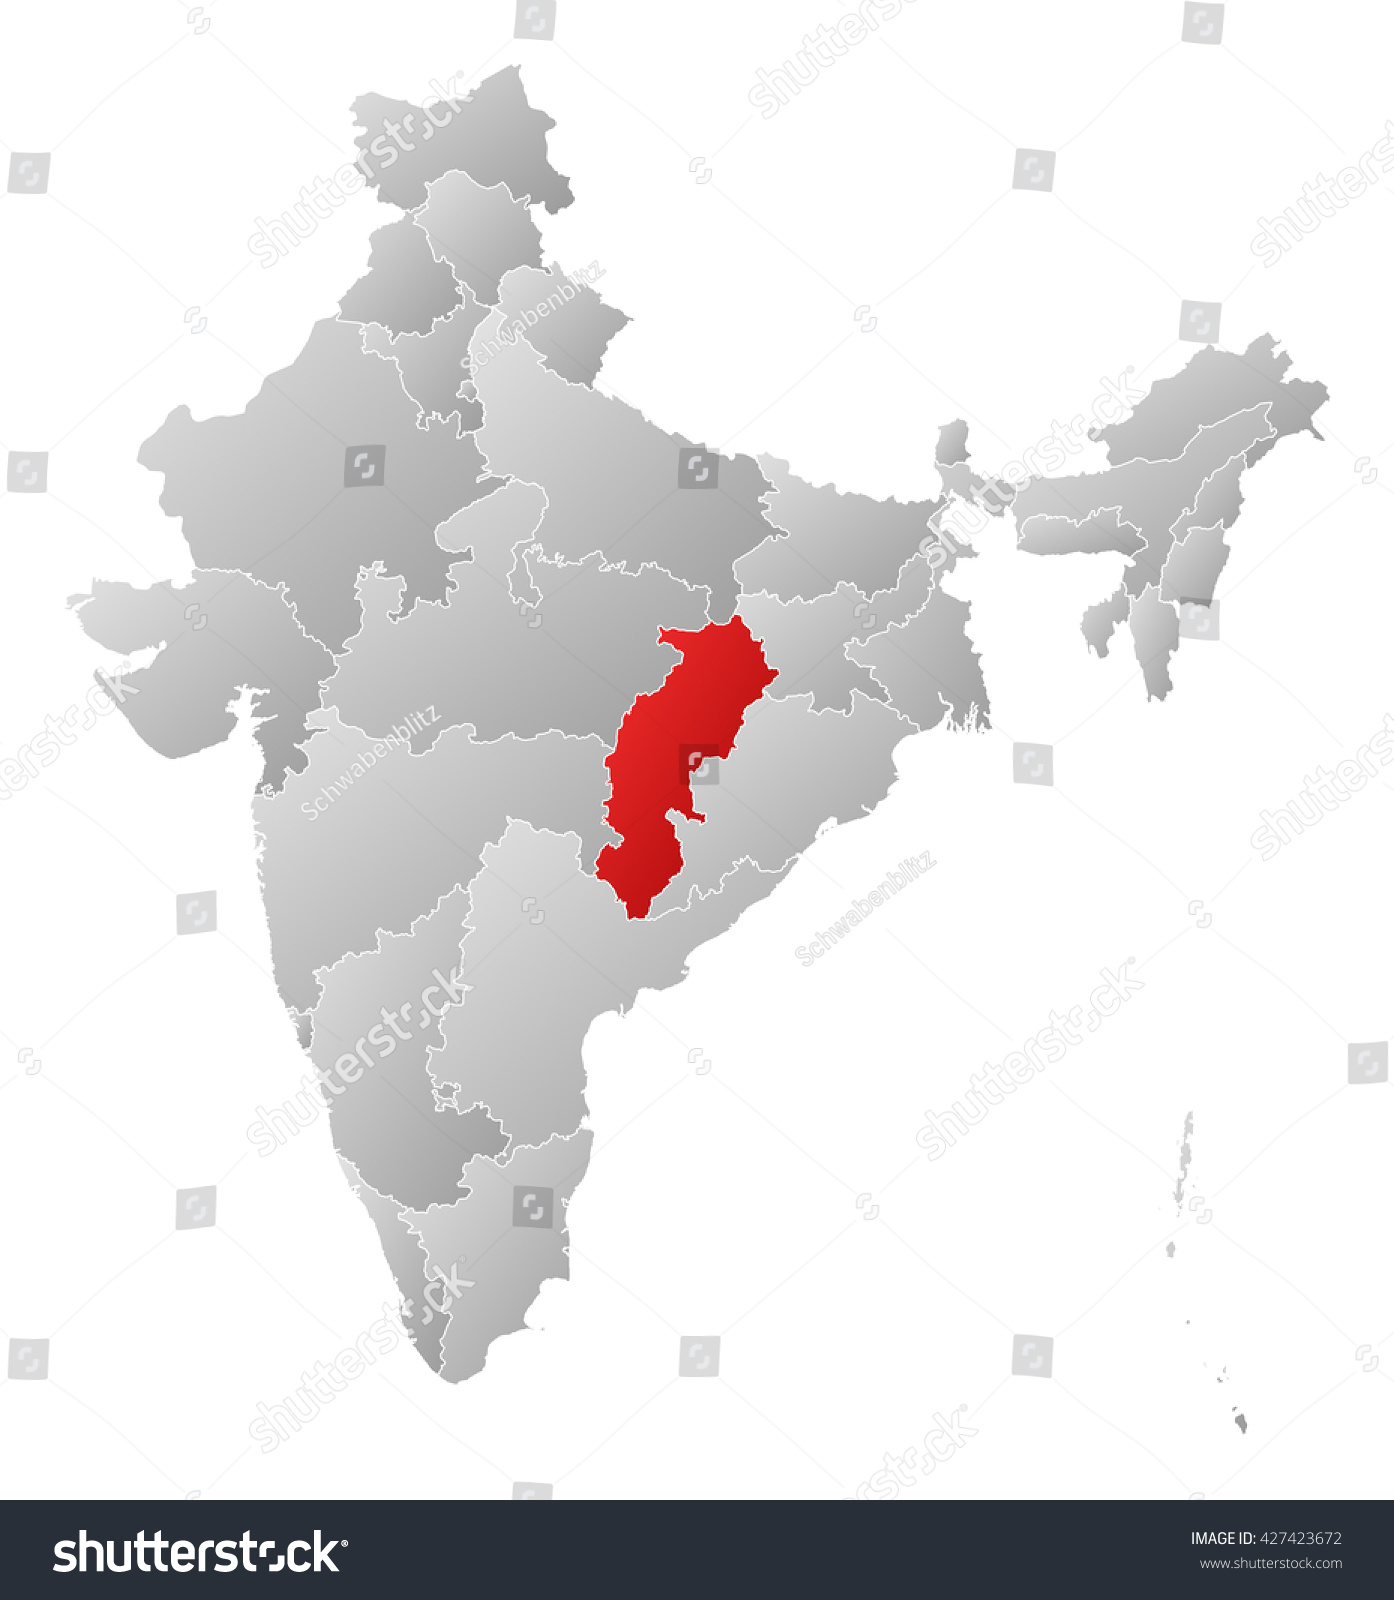 Map - India, Chhattisgarh - Royalty Free Stock Photo 427423672 - Avopix.com